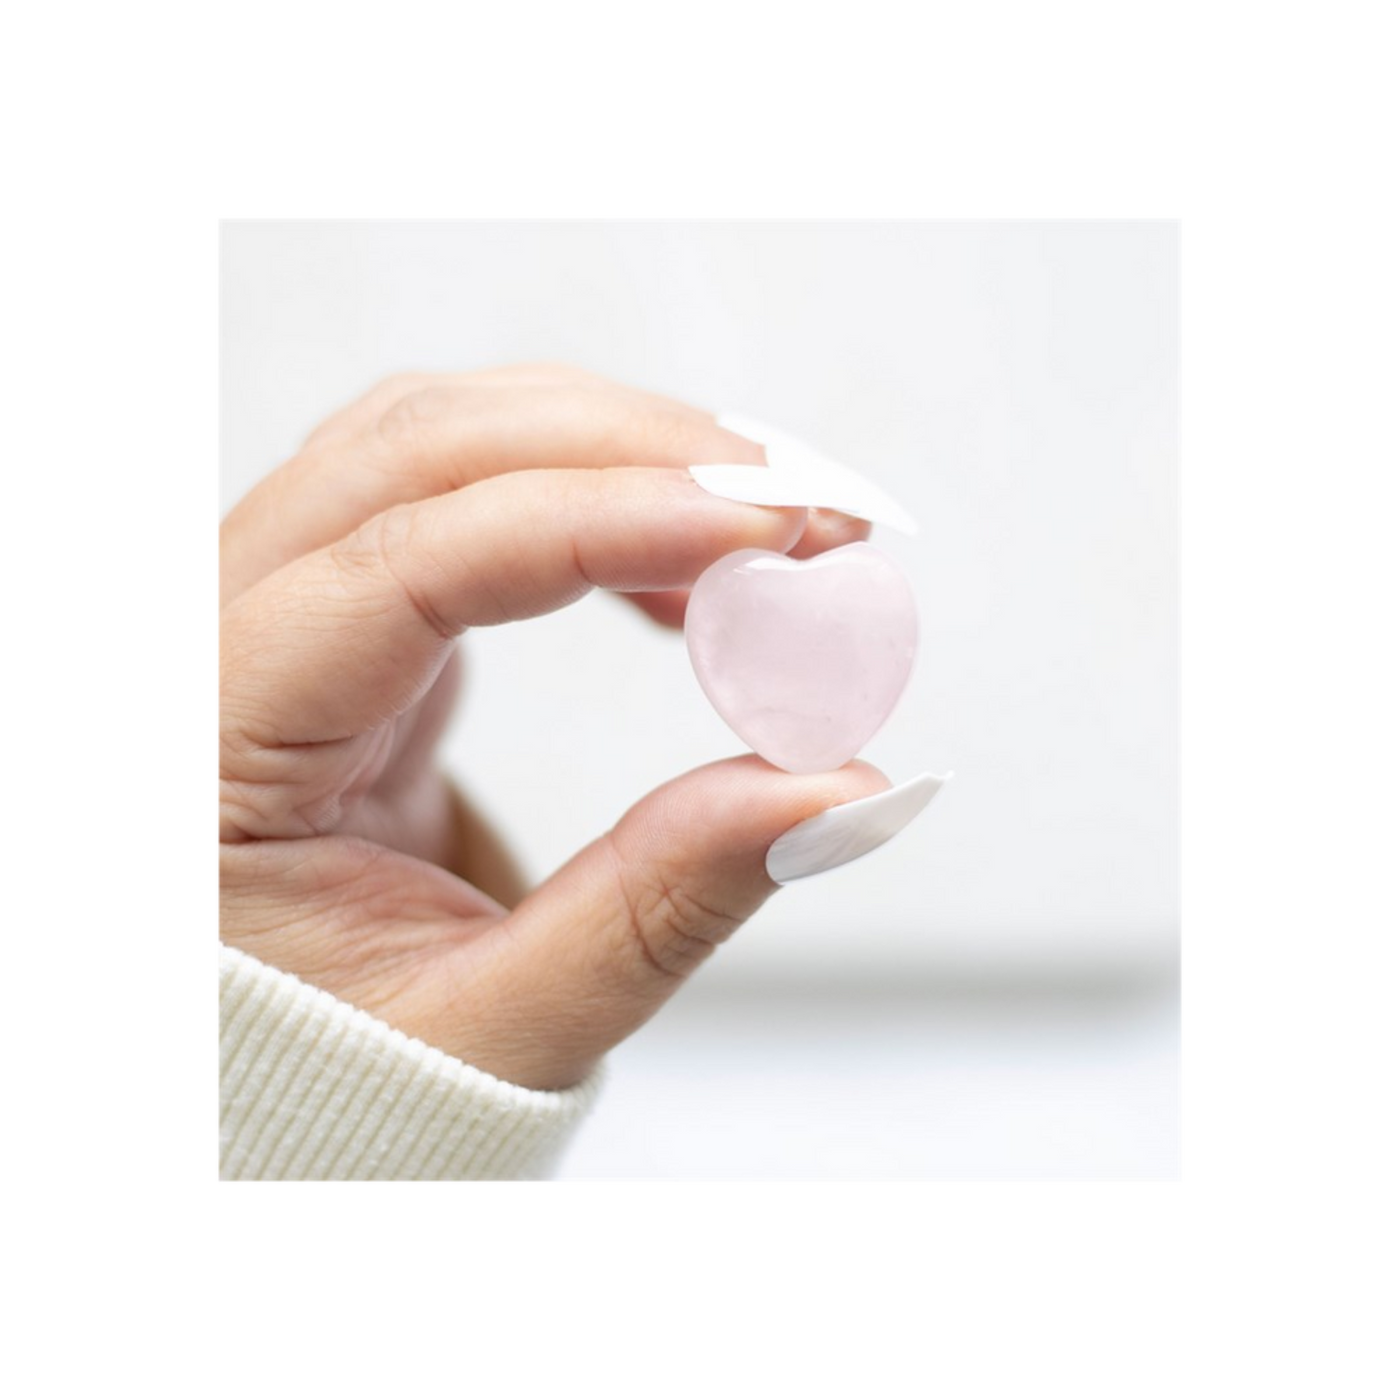 Rose Quartz Heart Shaped Gemstone Crystal Heart In A Drawstring Bag.